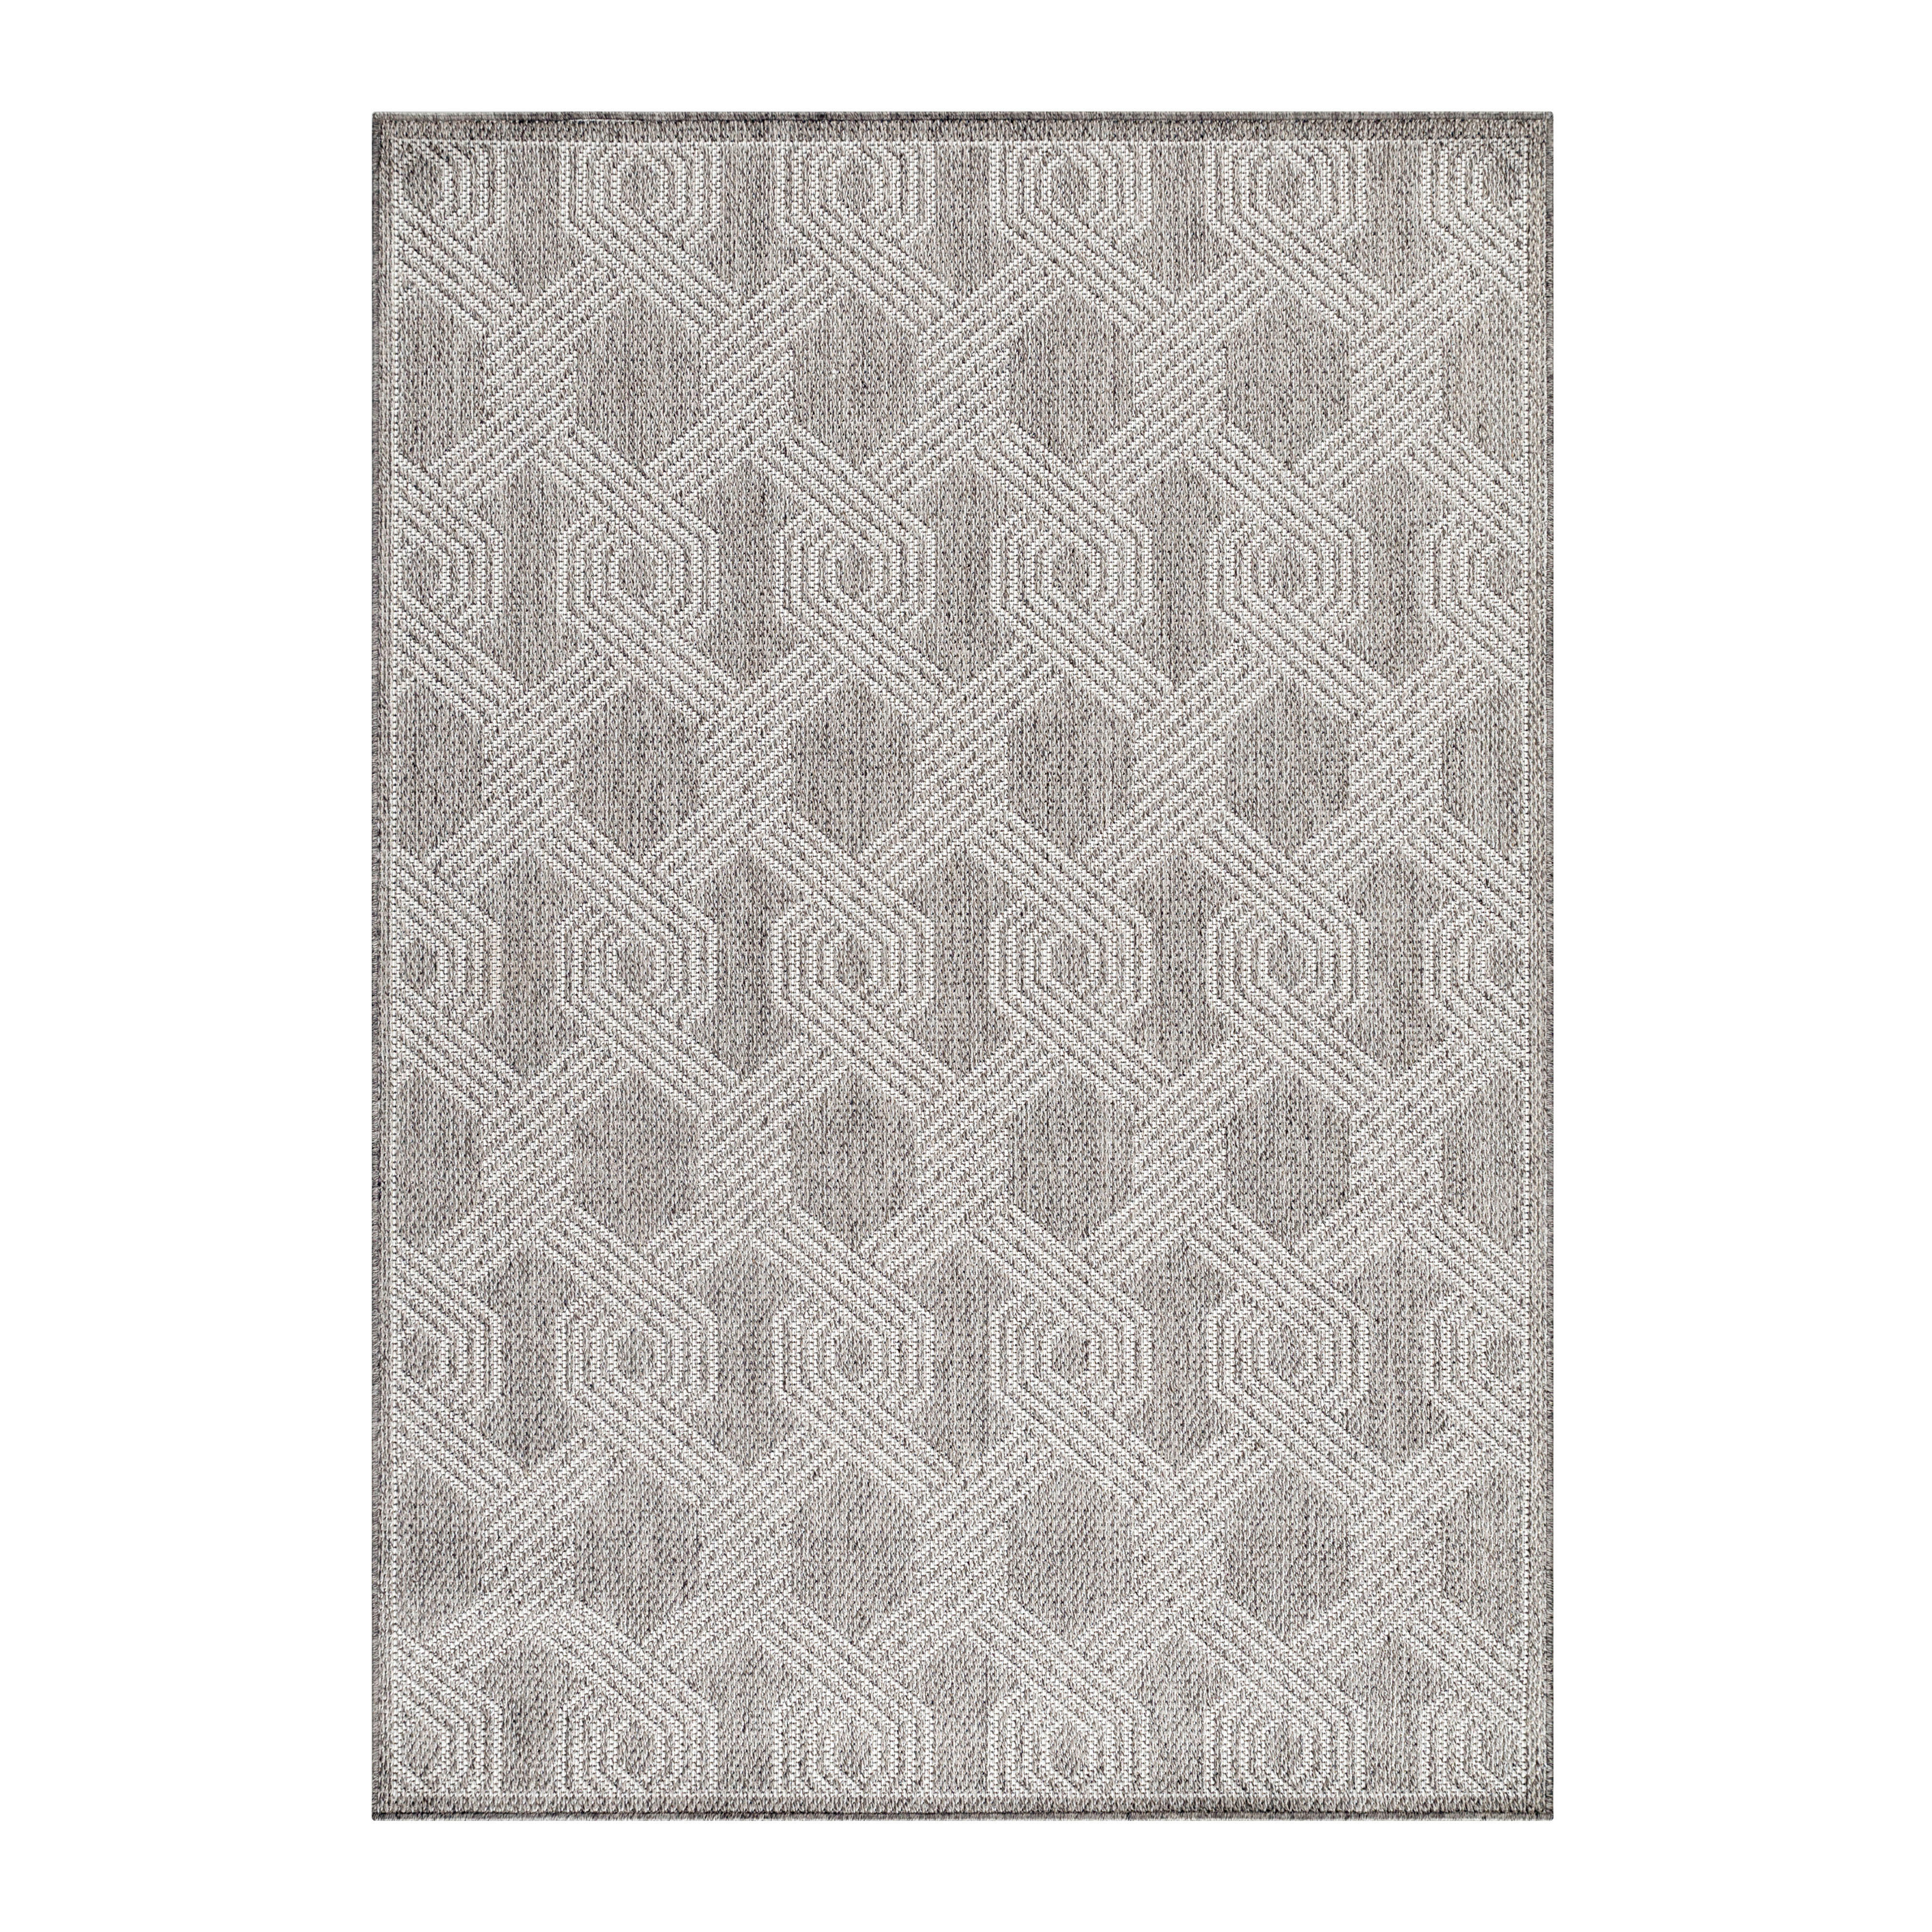 FLACHWEBETEPPICH  120/170 cm  Grau   - Grau, Design, Textil (120/170cm) - Novel